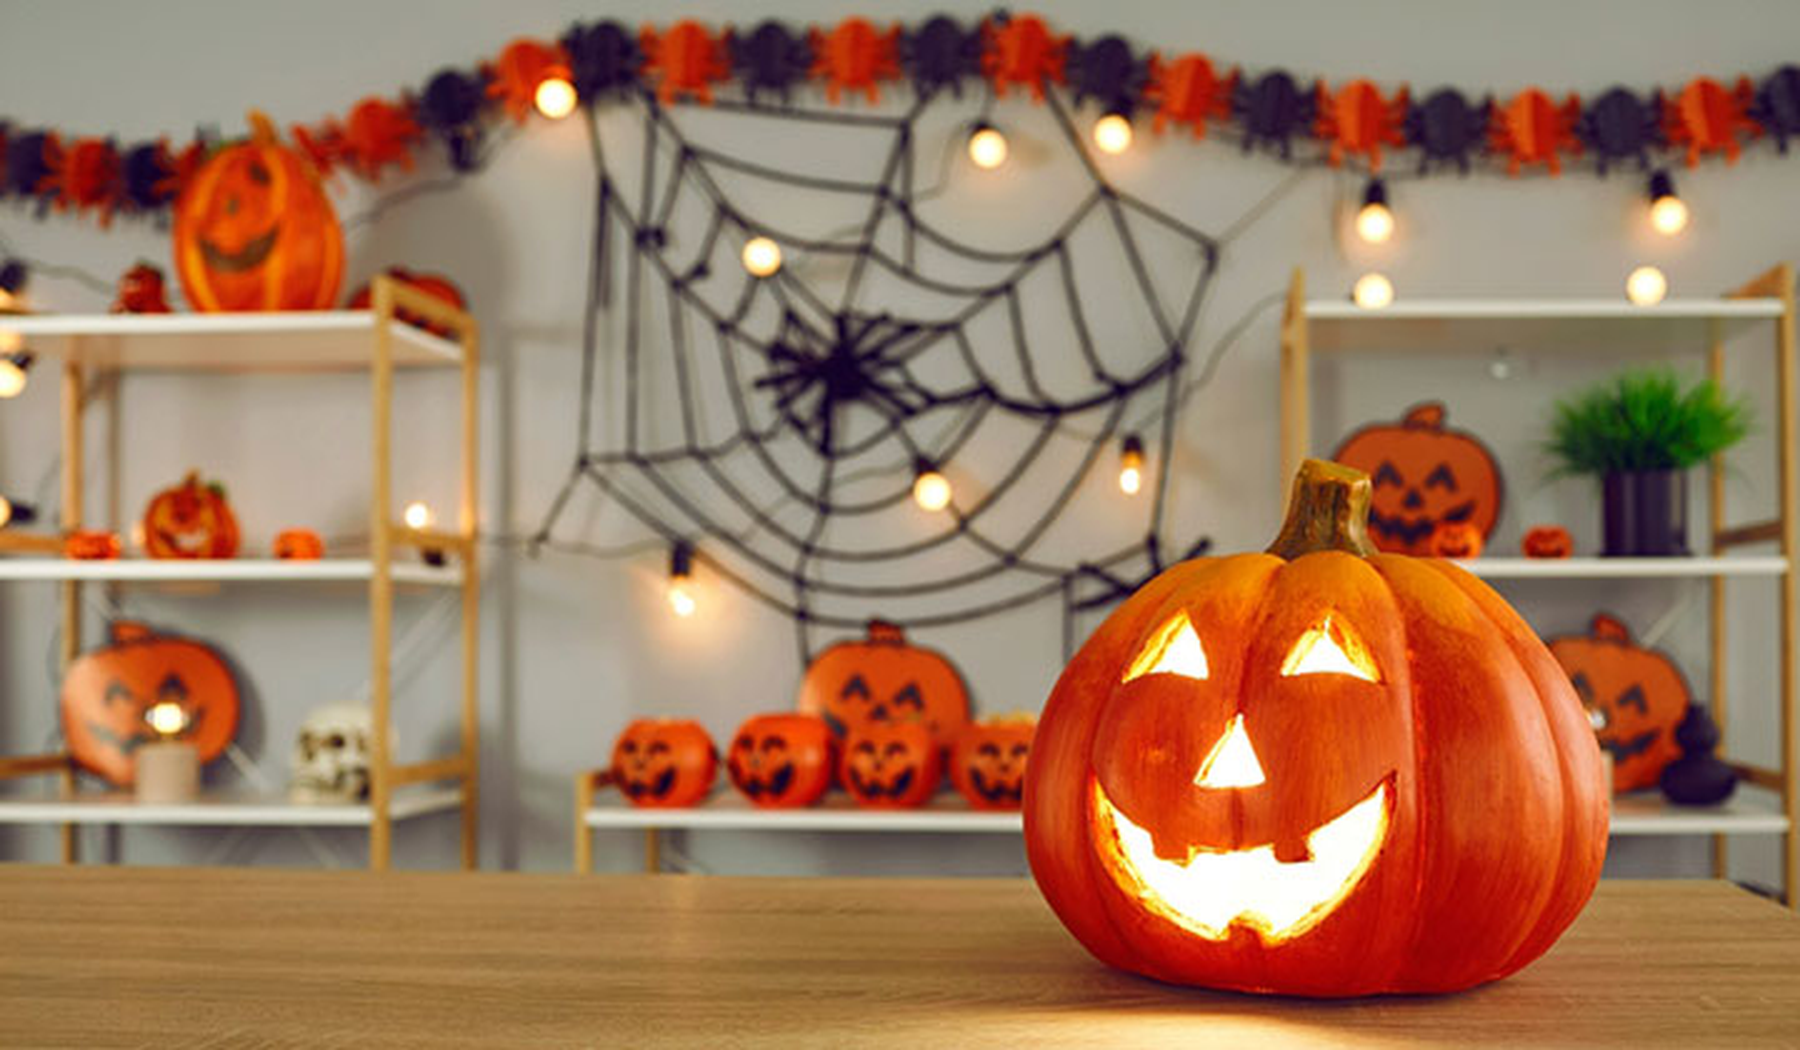 Halloween decor with a yarn spider web, jack o lanterns and black and orange garland